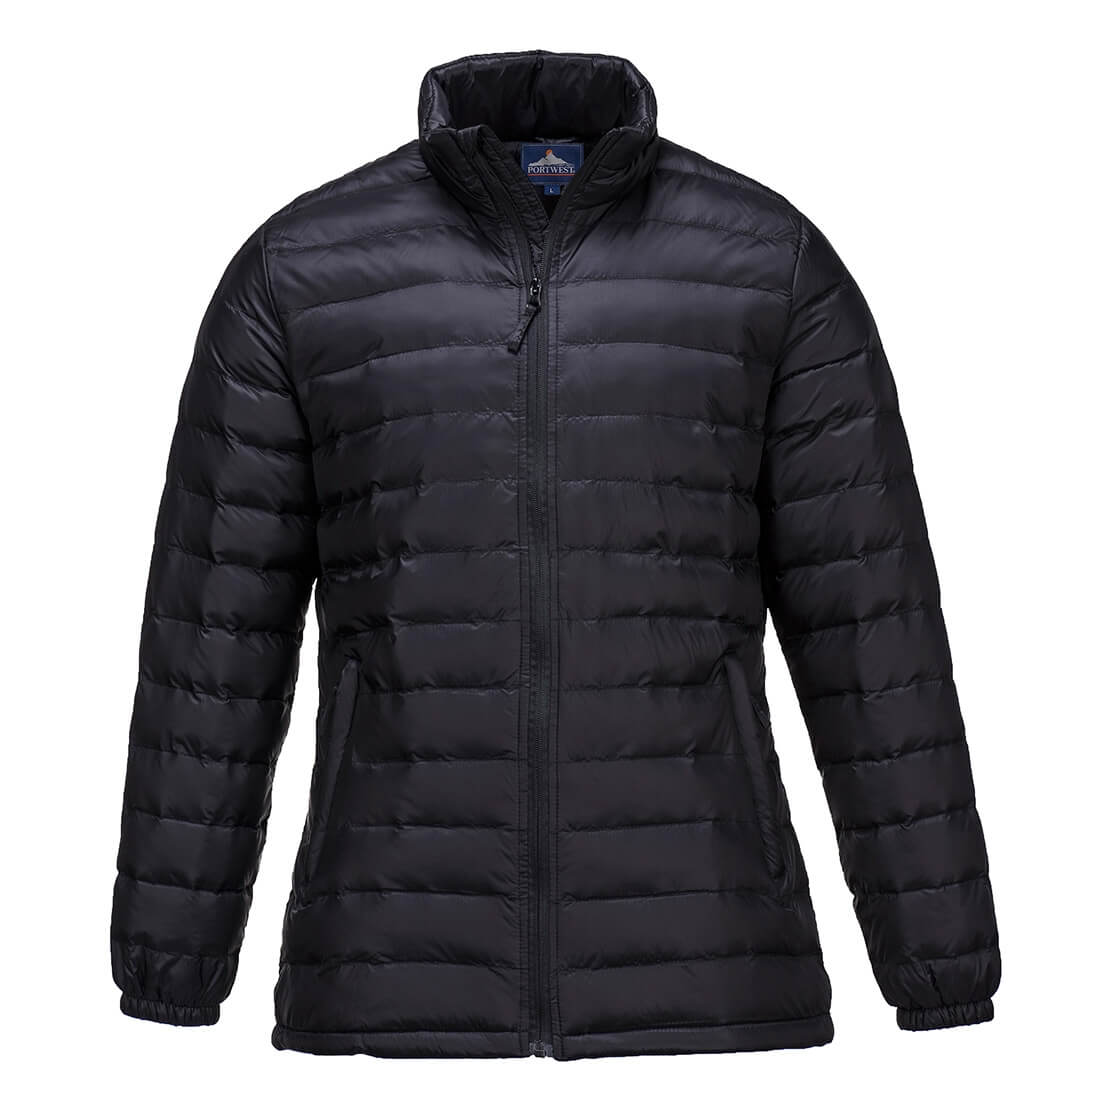 Aspen Ladies Jacket - Safetywear